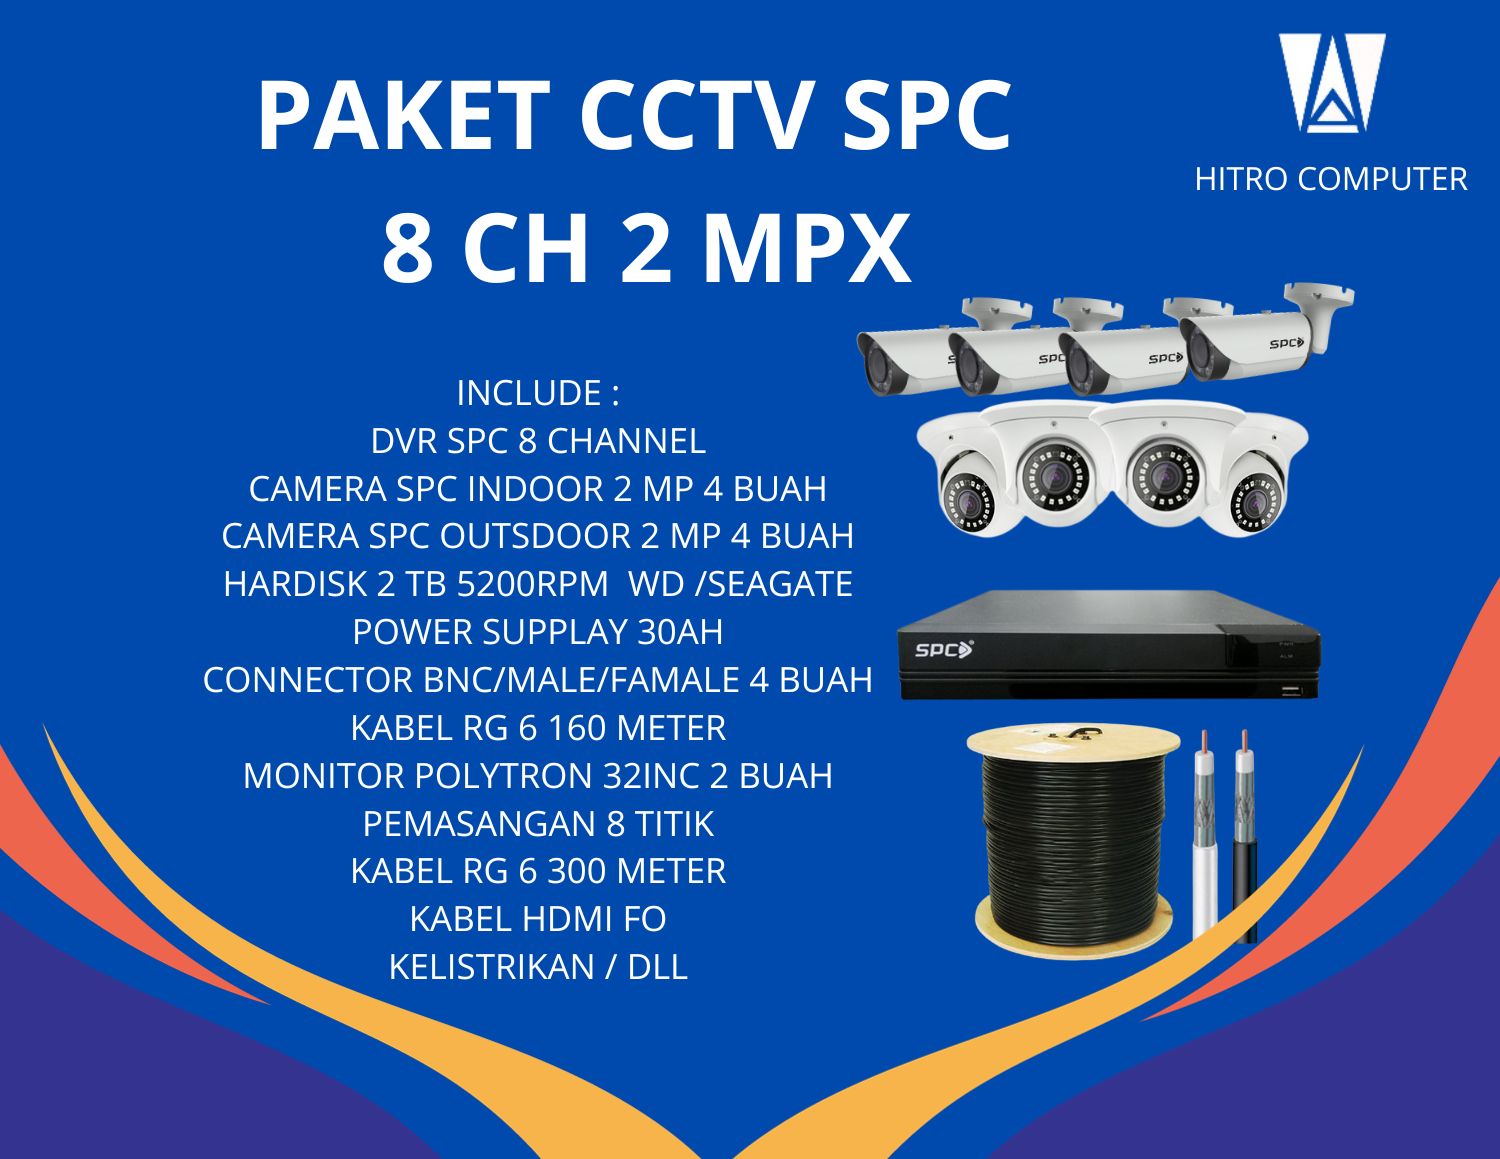 PAKET CCTV SPC 8 CH 2 MPX